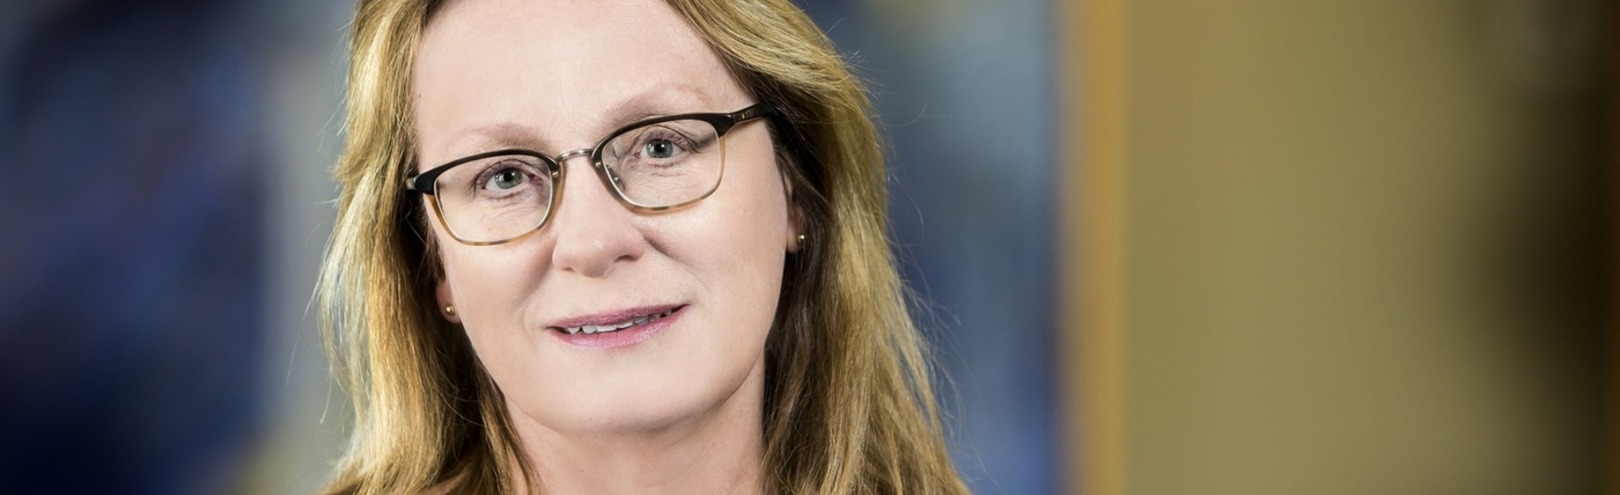 Inga Þórsdóttir receives a prestigious international fellowship for nutrition science - Available at University of Iceland